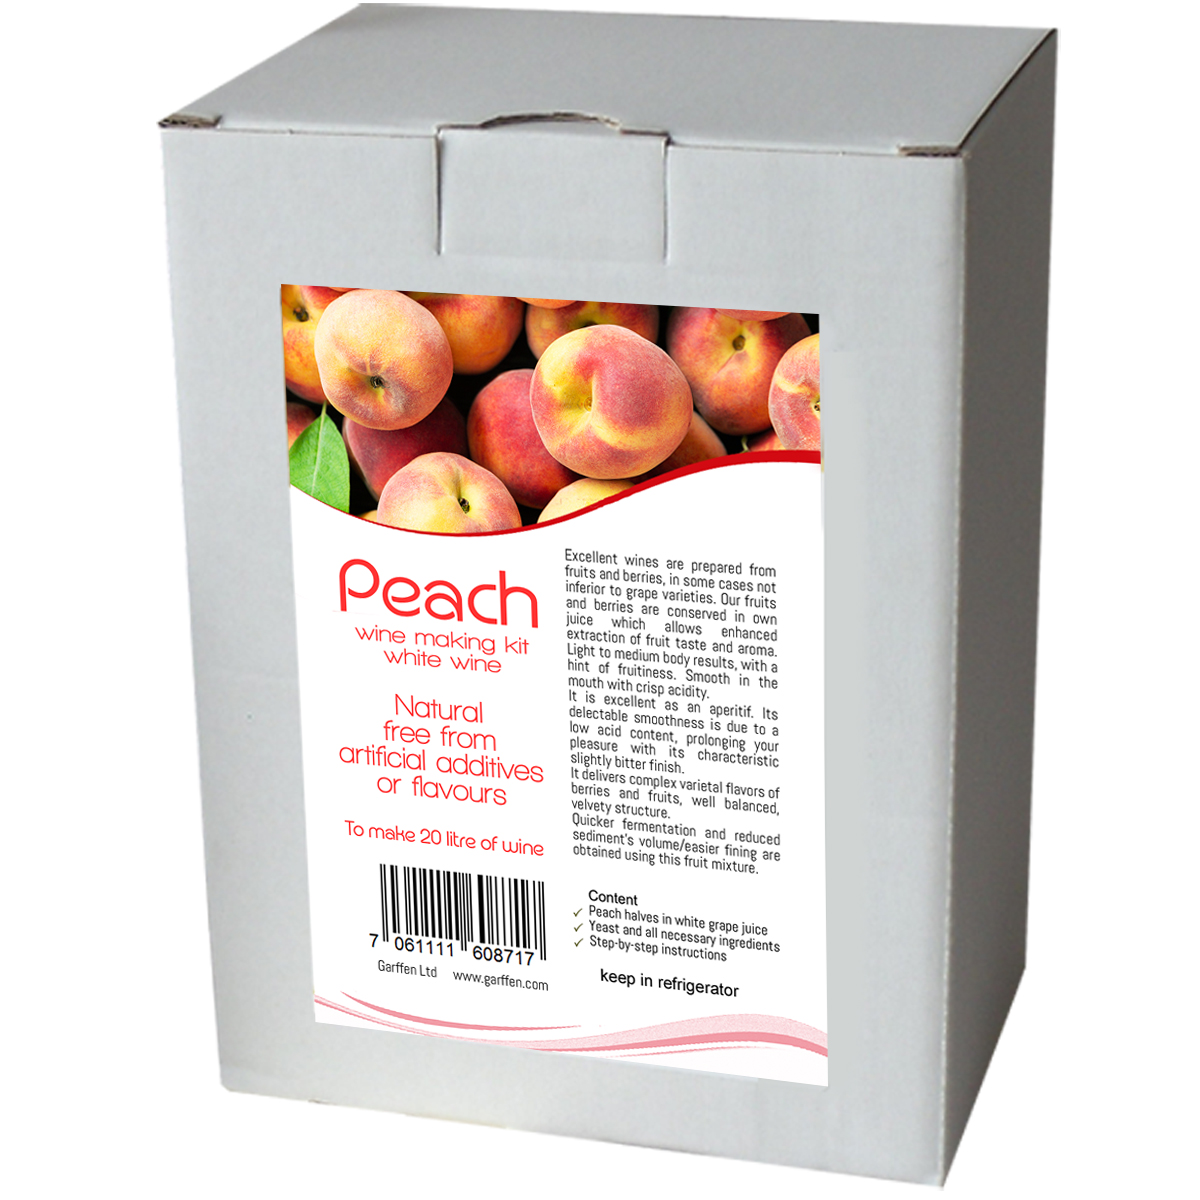 Peach wine making kit